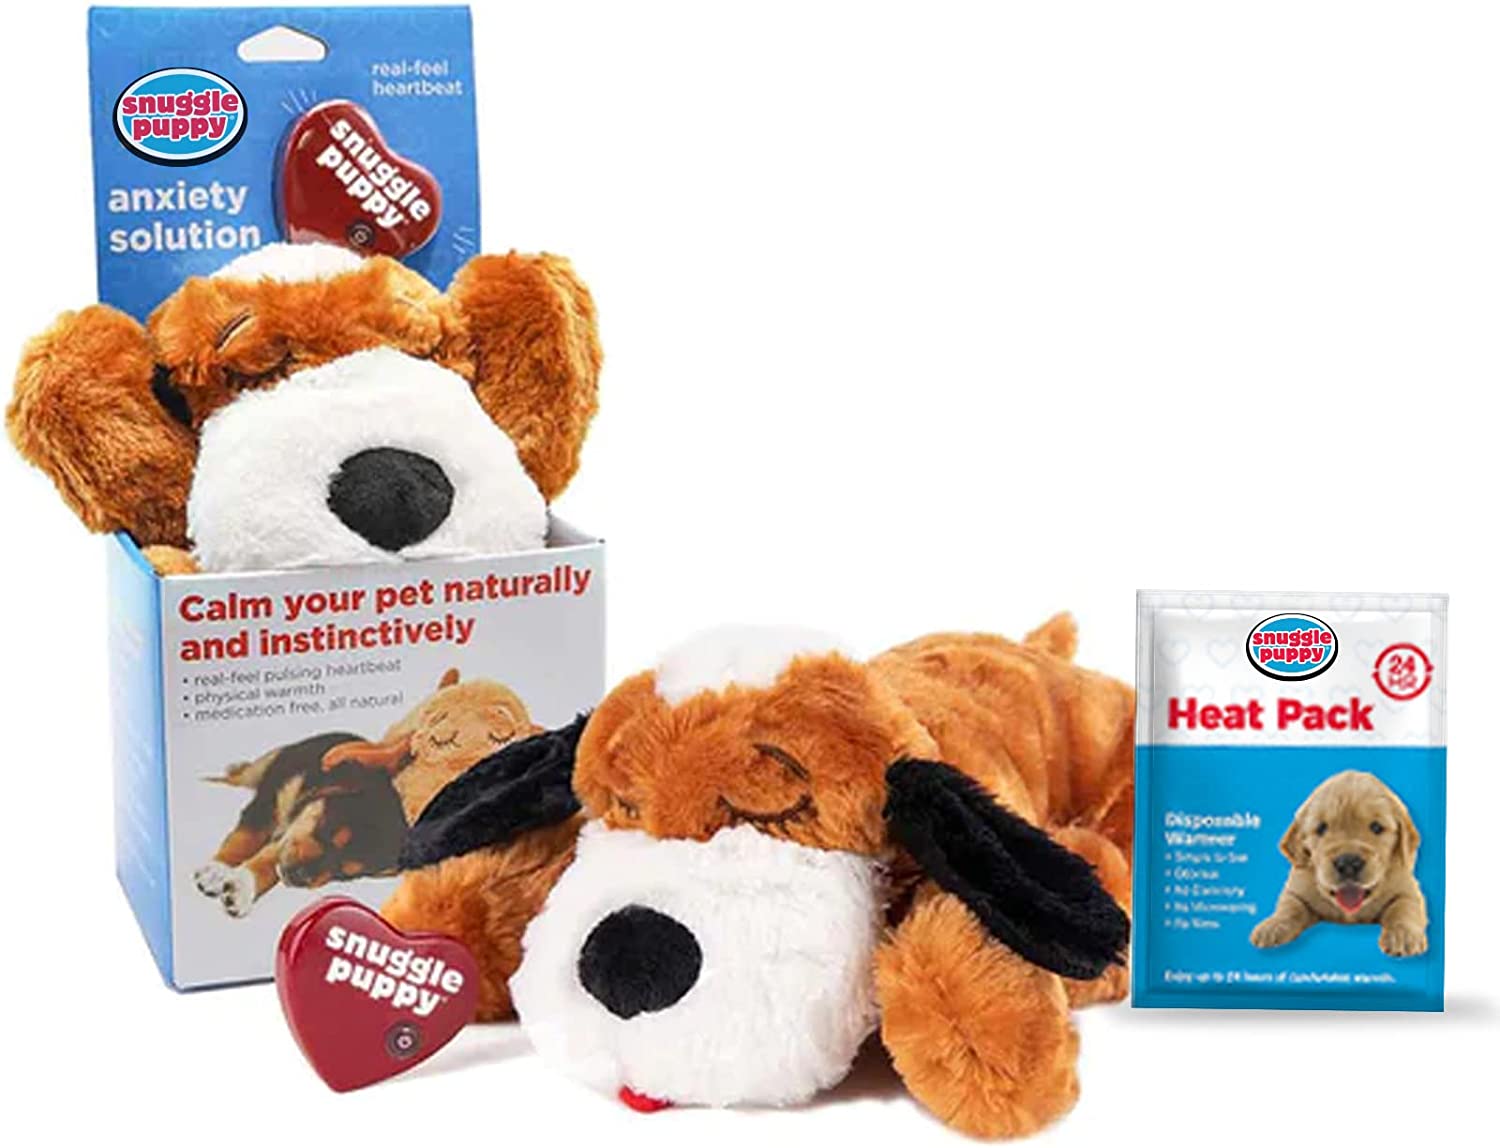 2. SmartPetLove Snuggle Puppy Heartbeat Stuffed Toy